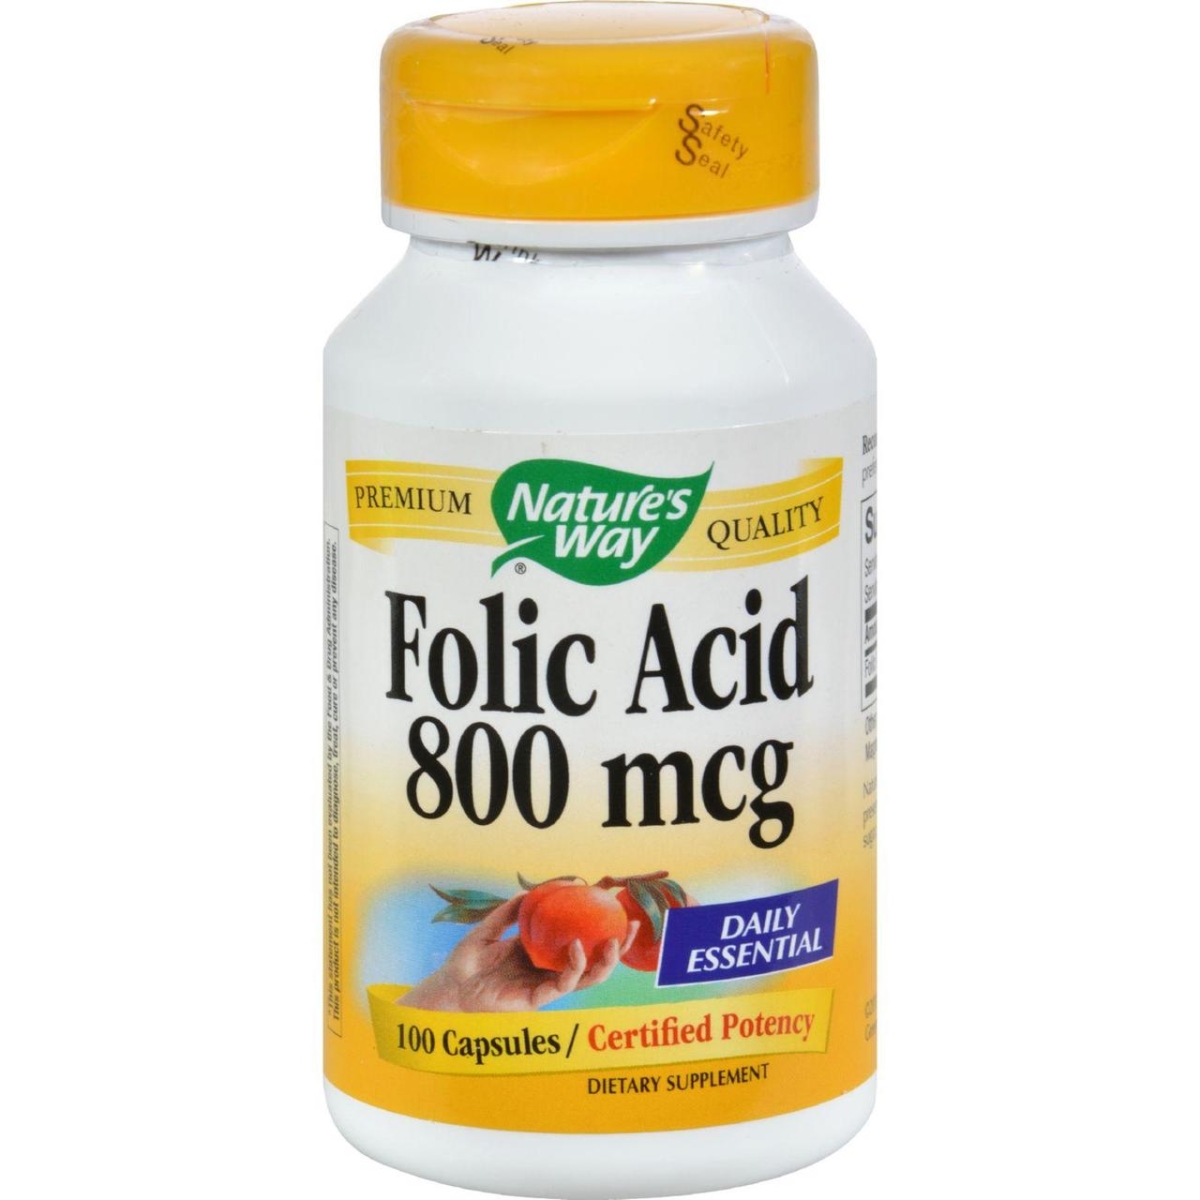 Hg0816926 800 Mcg Folic Acid - 100 Capsules